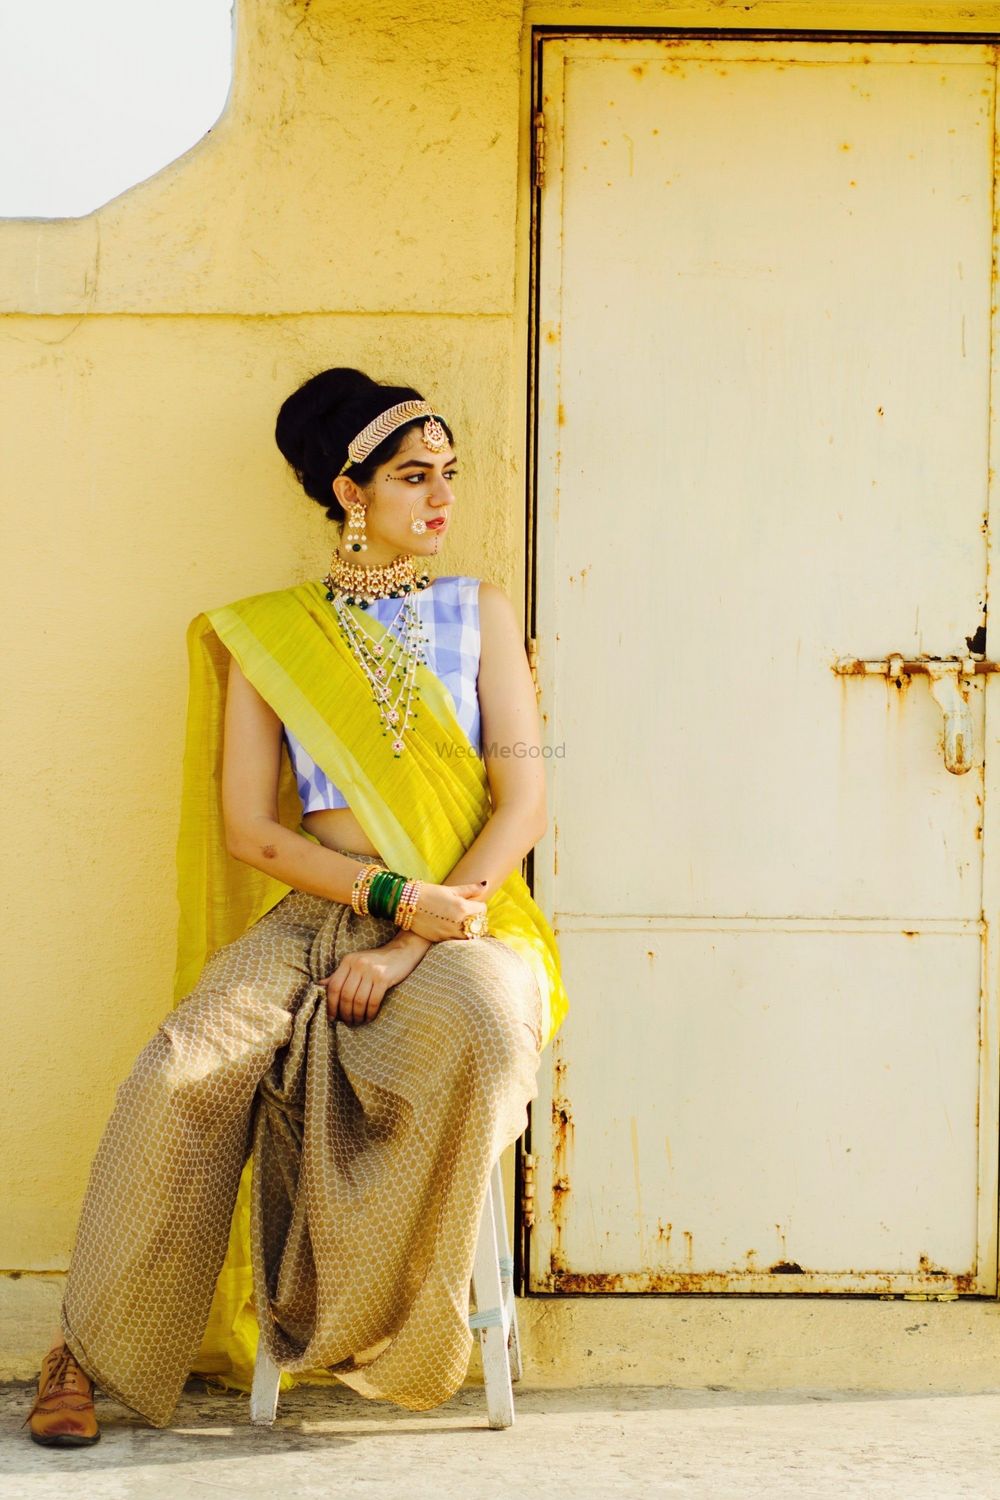 Photo From StyleDiaries - By Sweta Parikh-Bespoke Jewelry